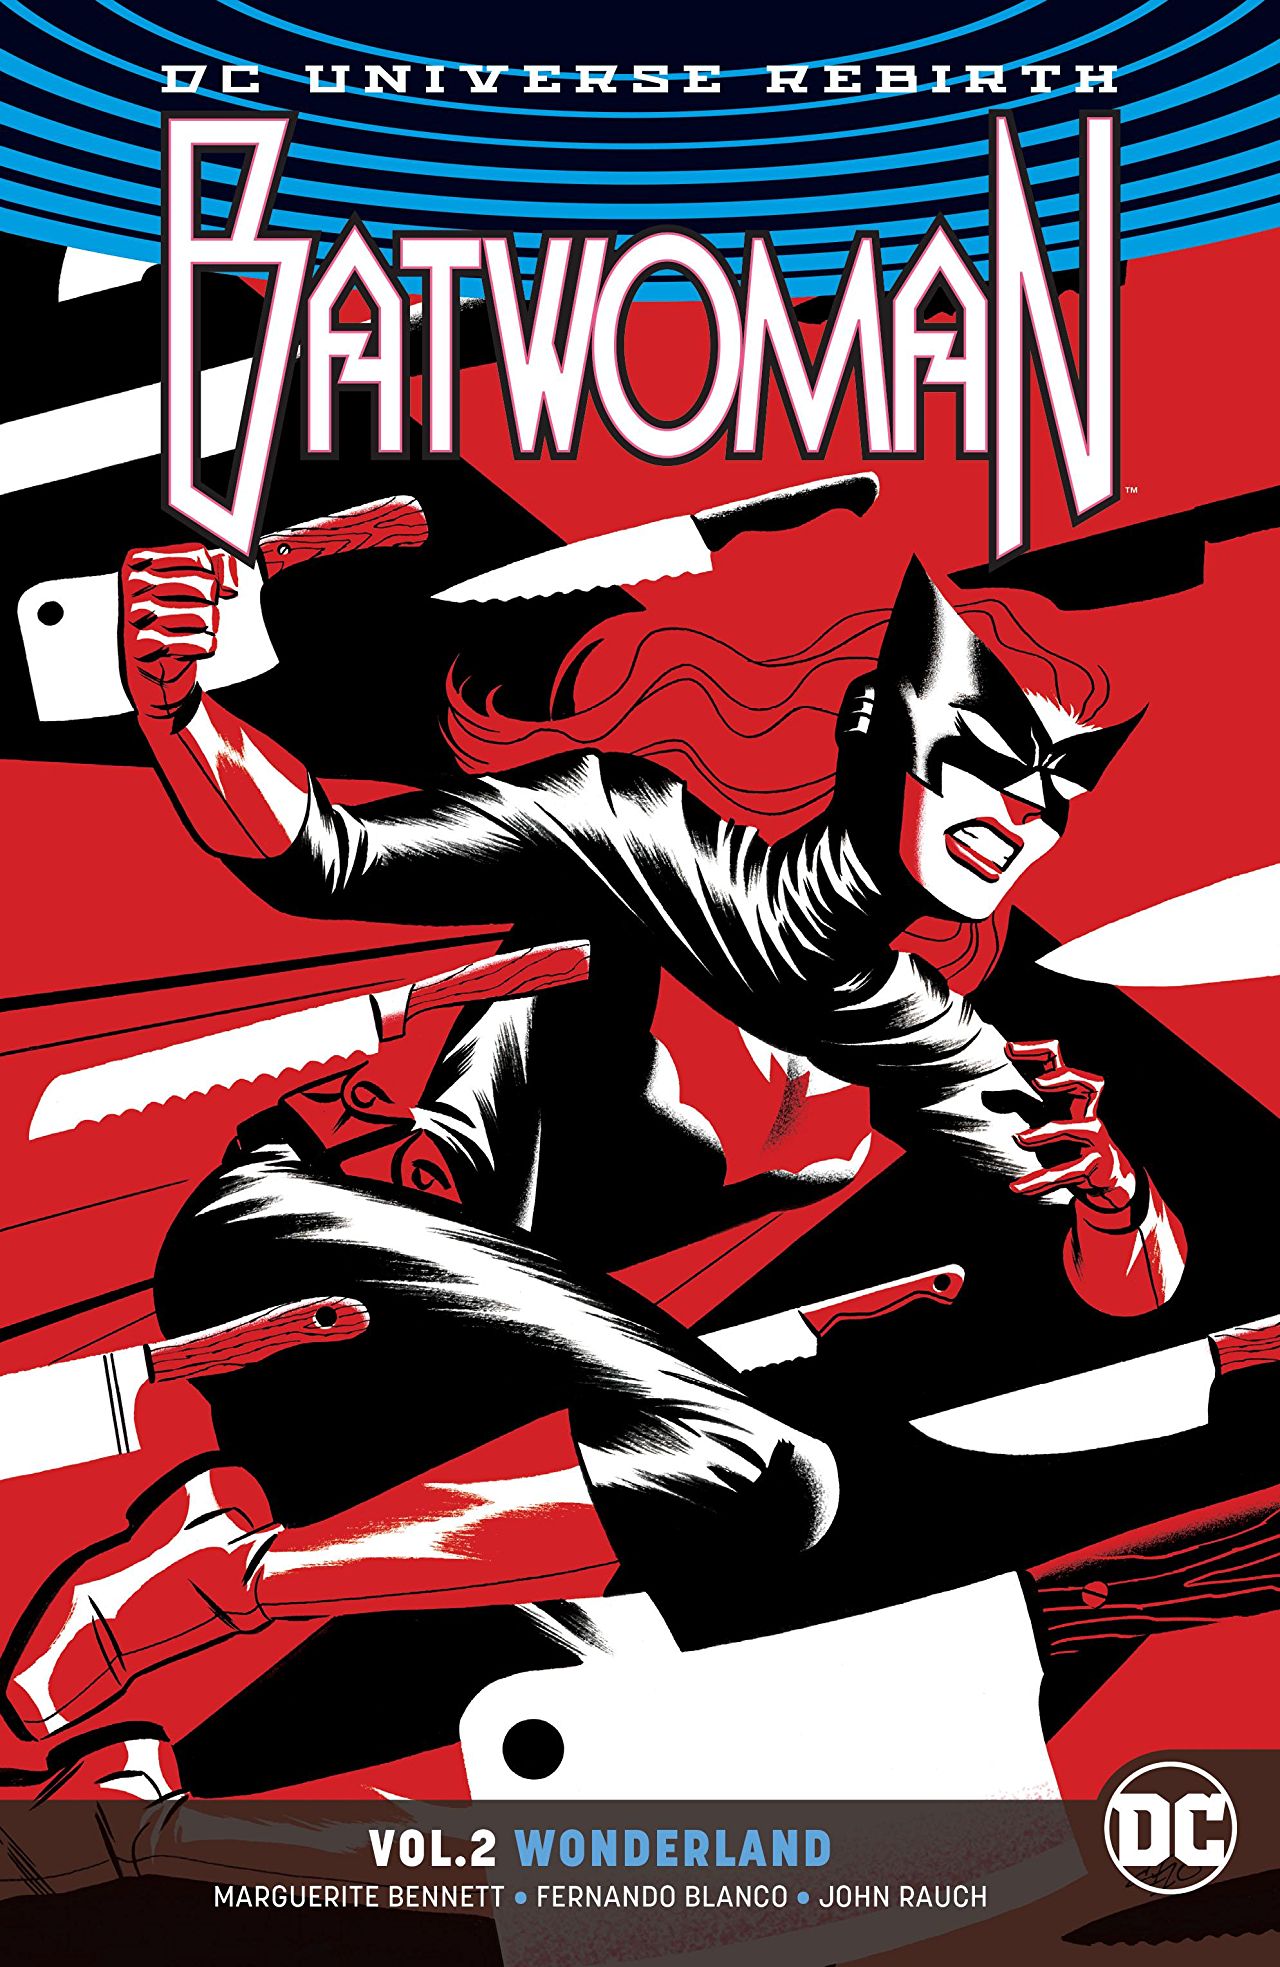 2019 GLAAD Media Awards Nominees: Batwoman Vol. 2, Wonderland